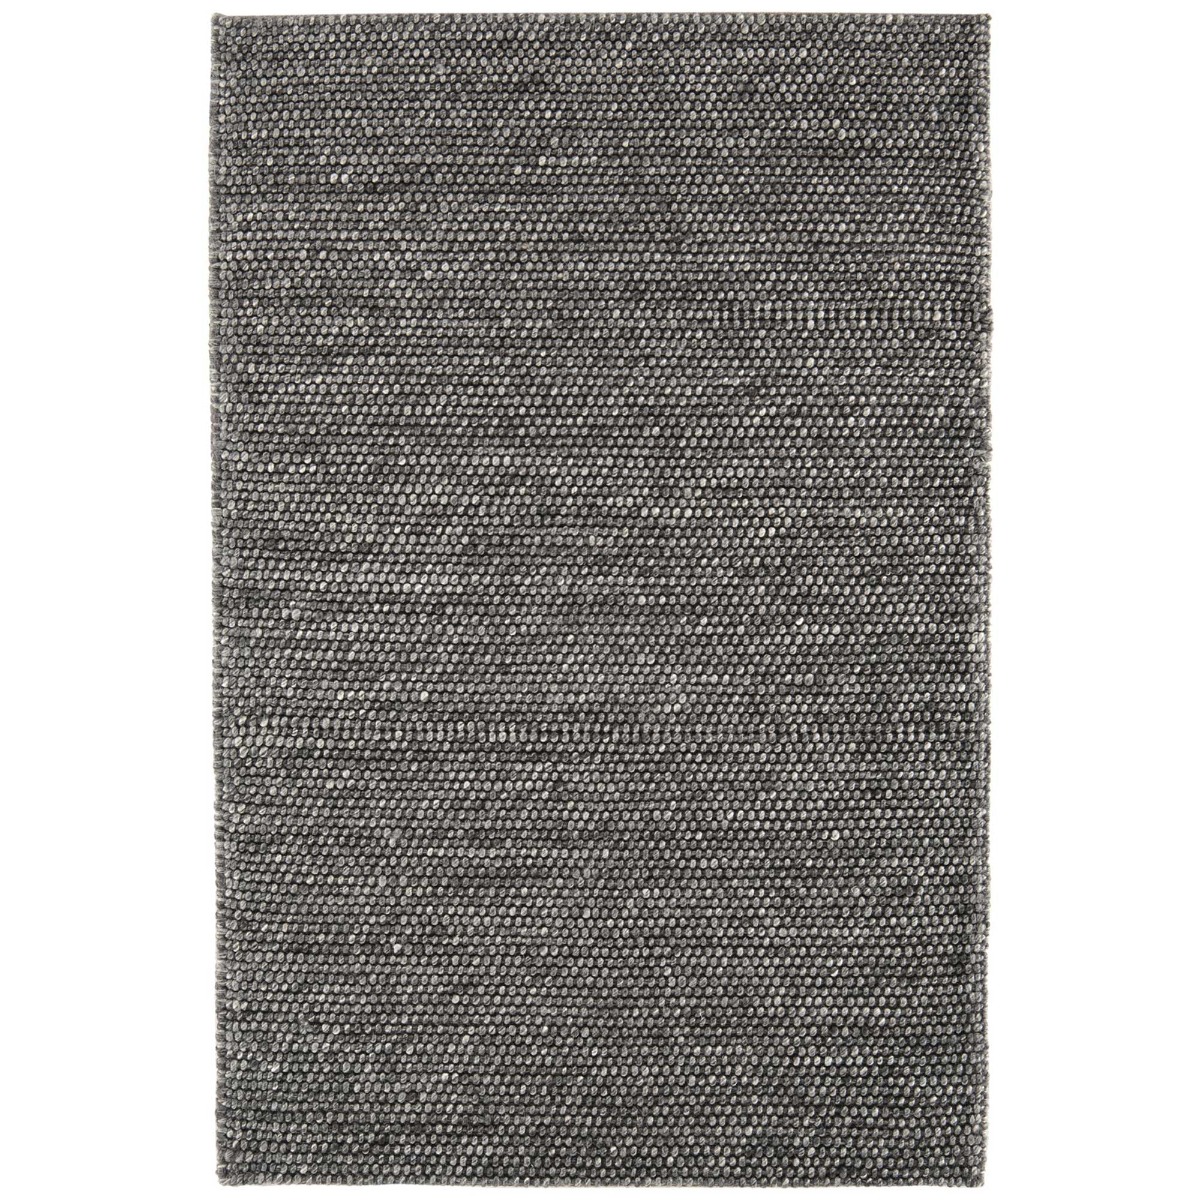 Flori Woven Charcoal 160x230cm Rug, Square, Grey Wool Blend | W160cm | Barker & Stonehouse